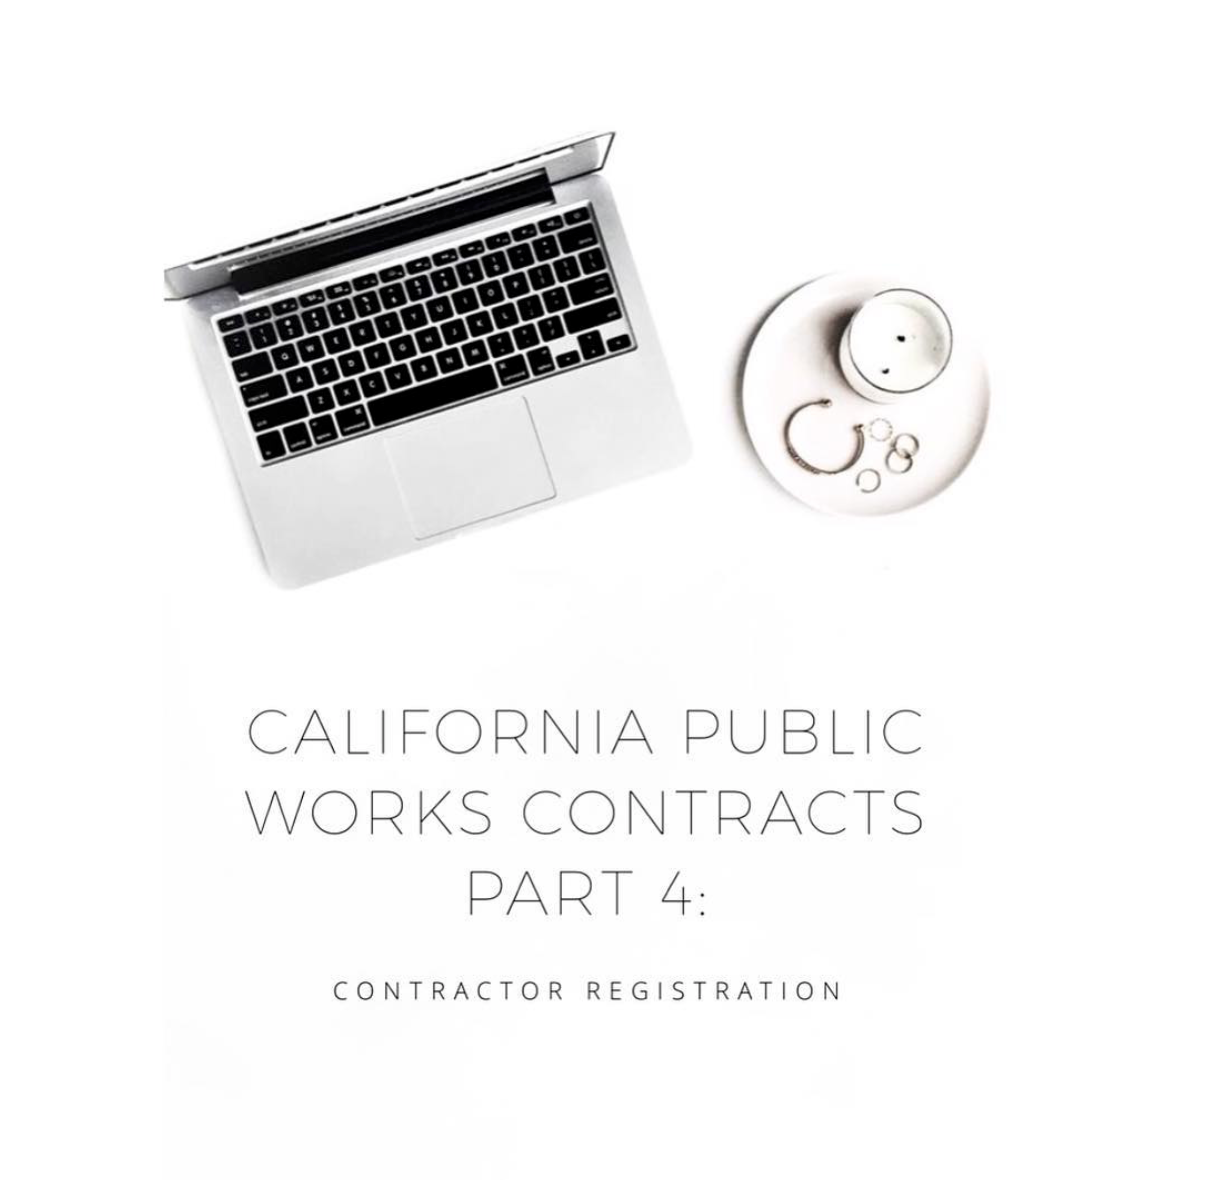 CALIFORNIA PUBLIC CONTRACTS IN CONSTRUCTION PART 4: CONTRACTOR REGISTRATION